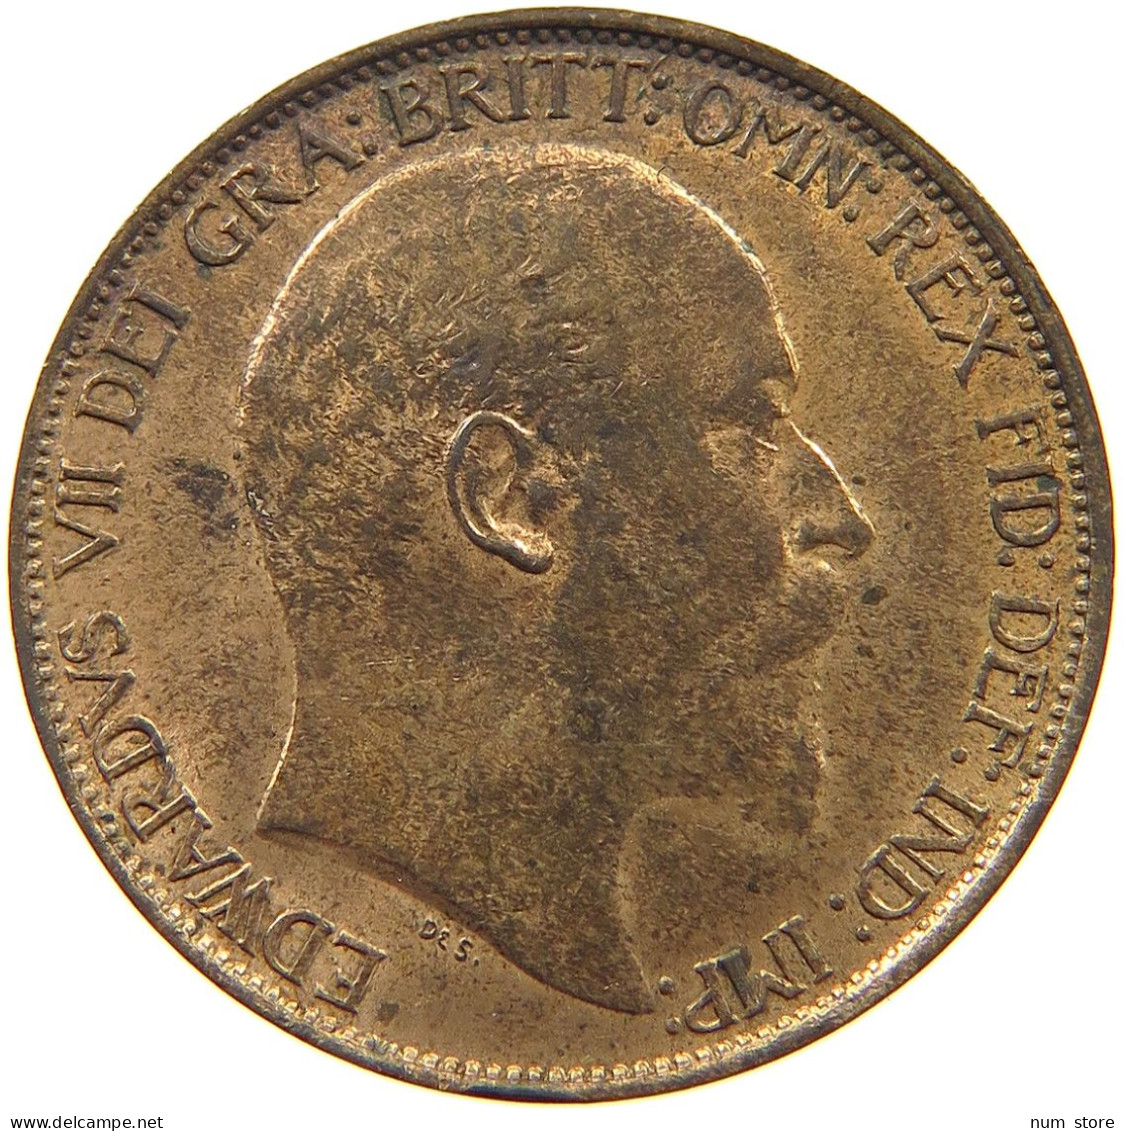 GREAT BRITAIN HALF PENNY 1902 Edward VII., 1901 - 1910 #t118 0223 - C. 1/2 Penny